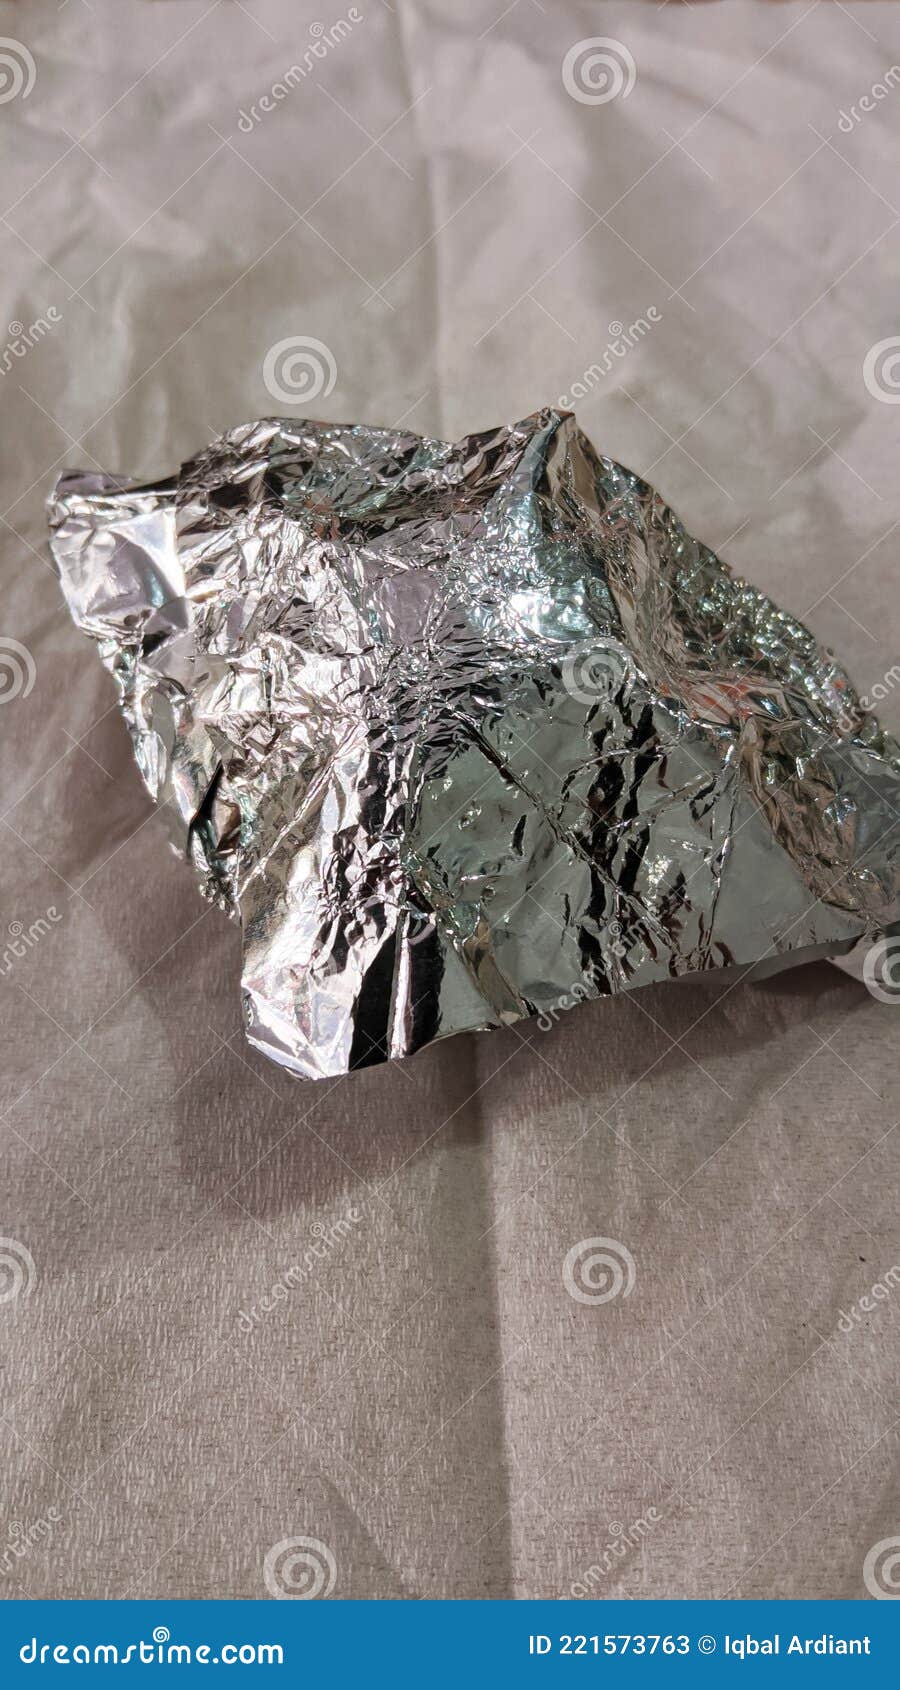 silver colored aluminum foil on white tissue.